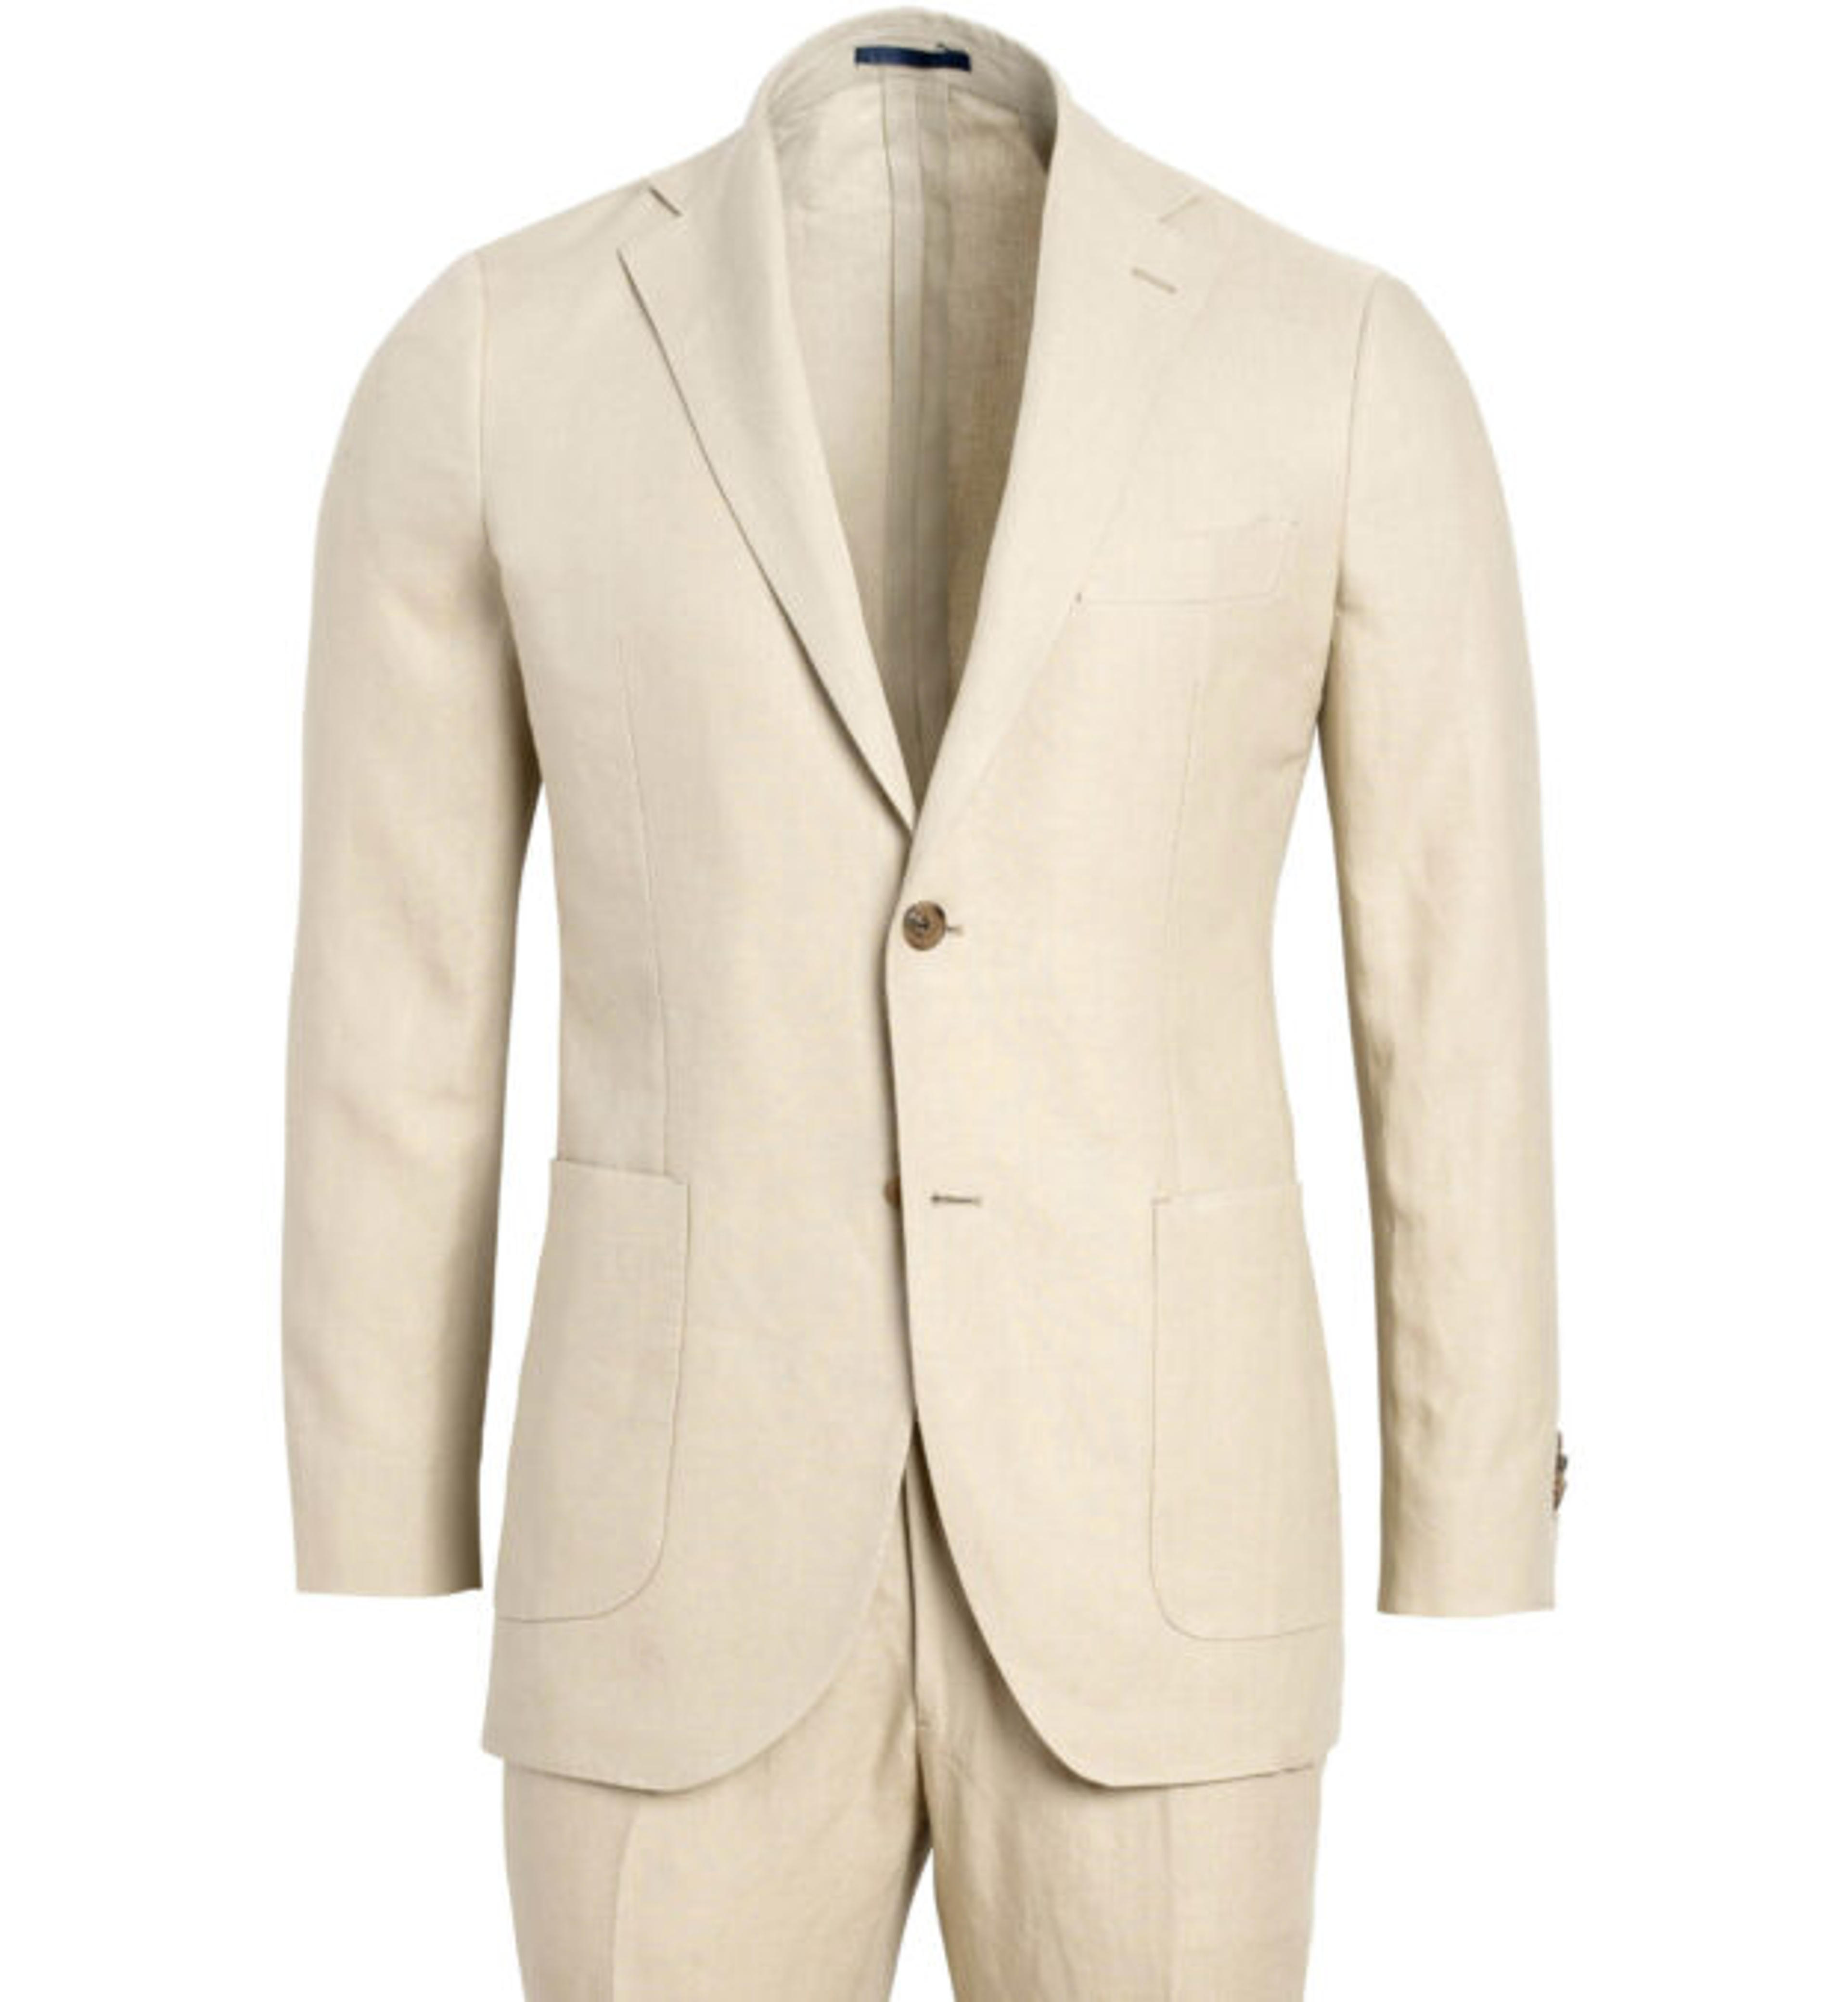 Bedford Beige Irish Linen Suit - Custom Fit Tailored Clothing